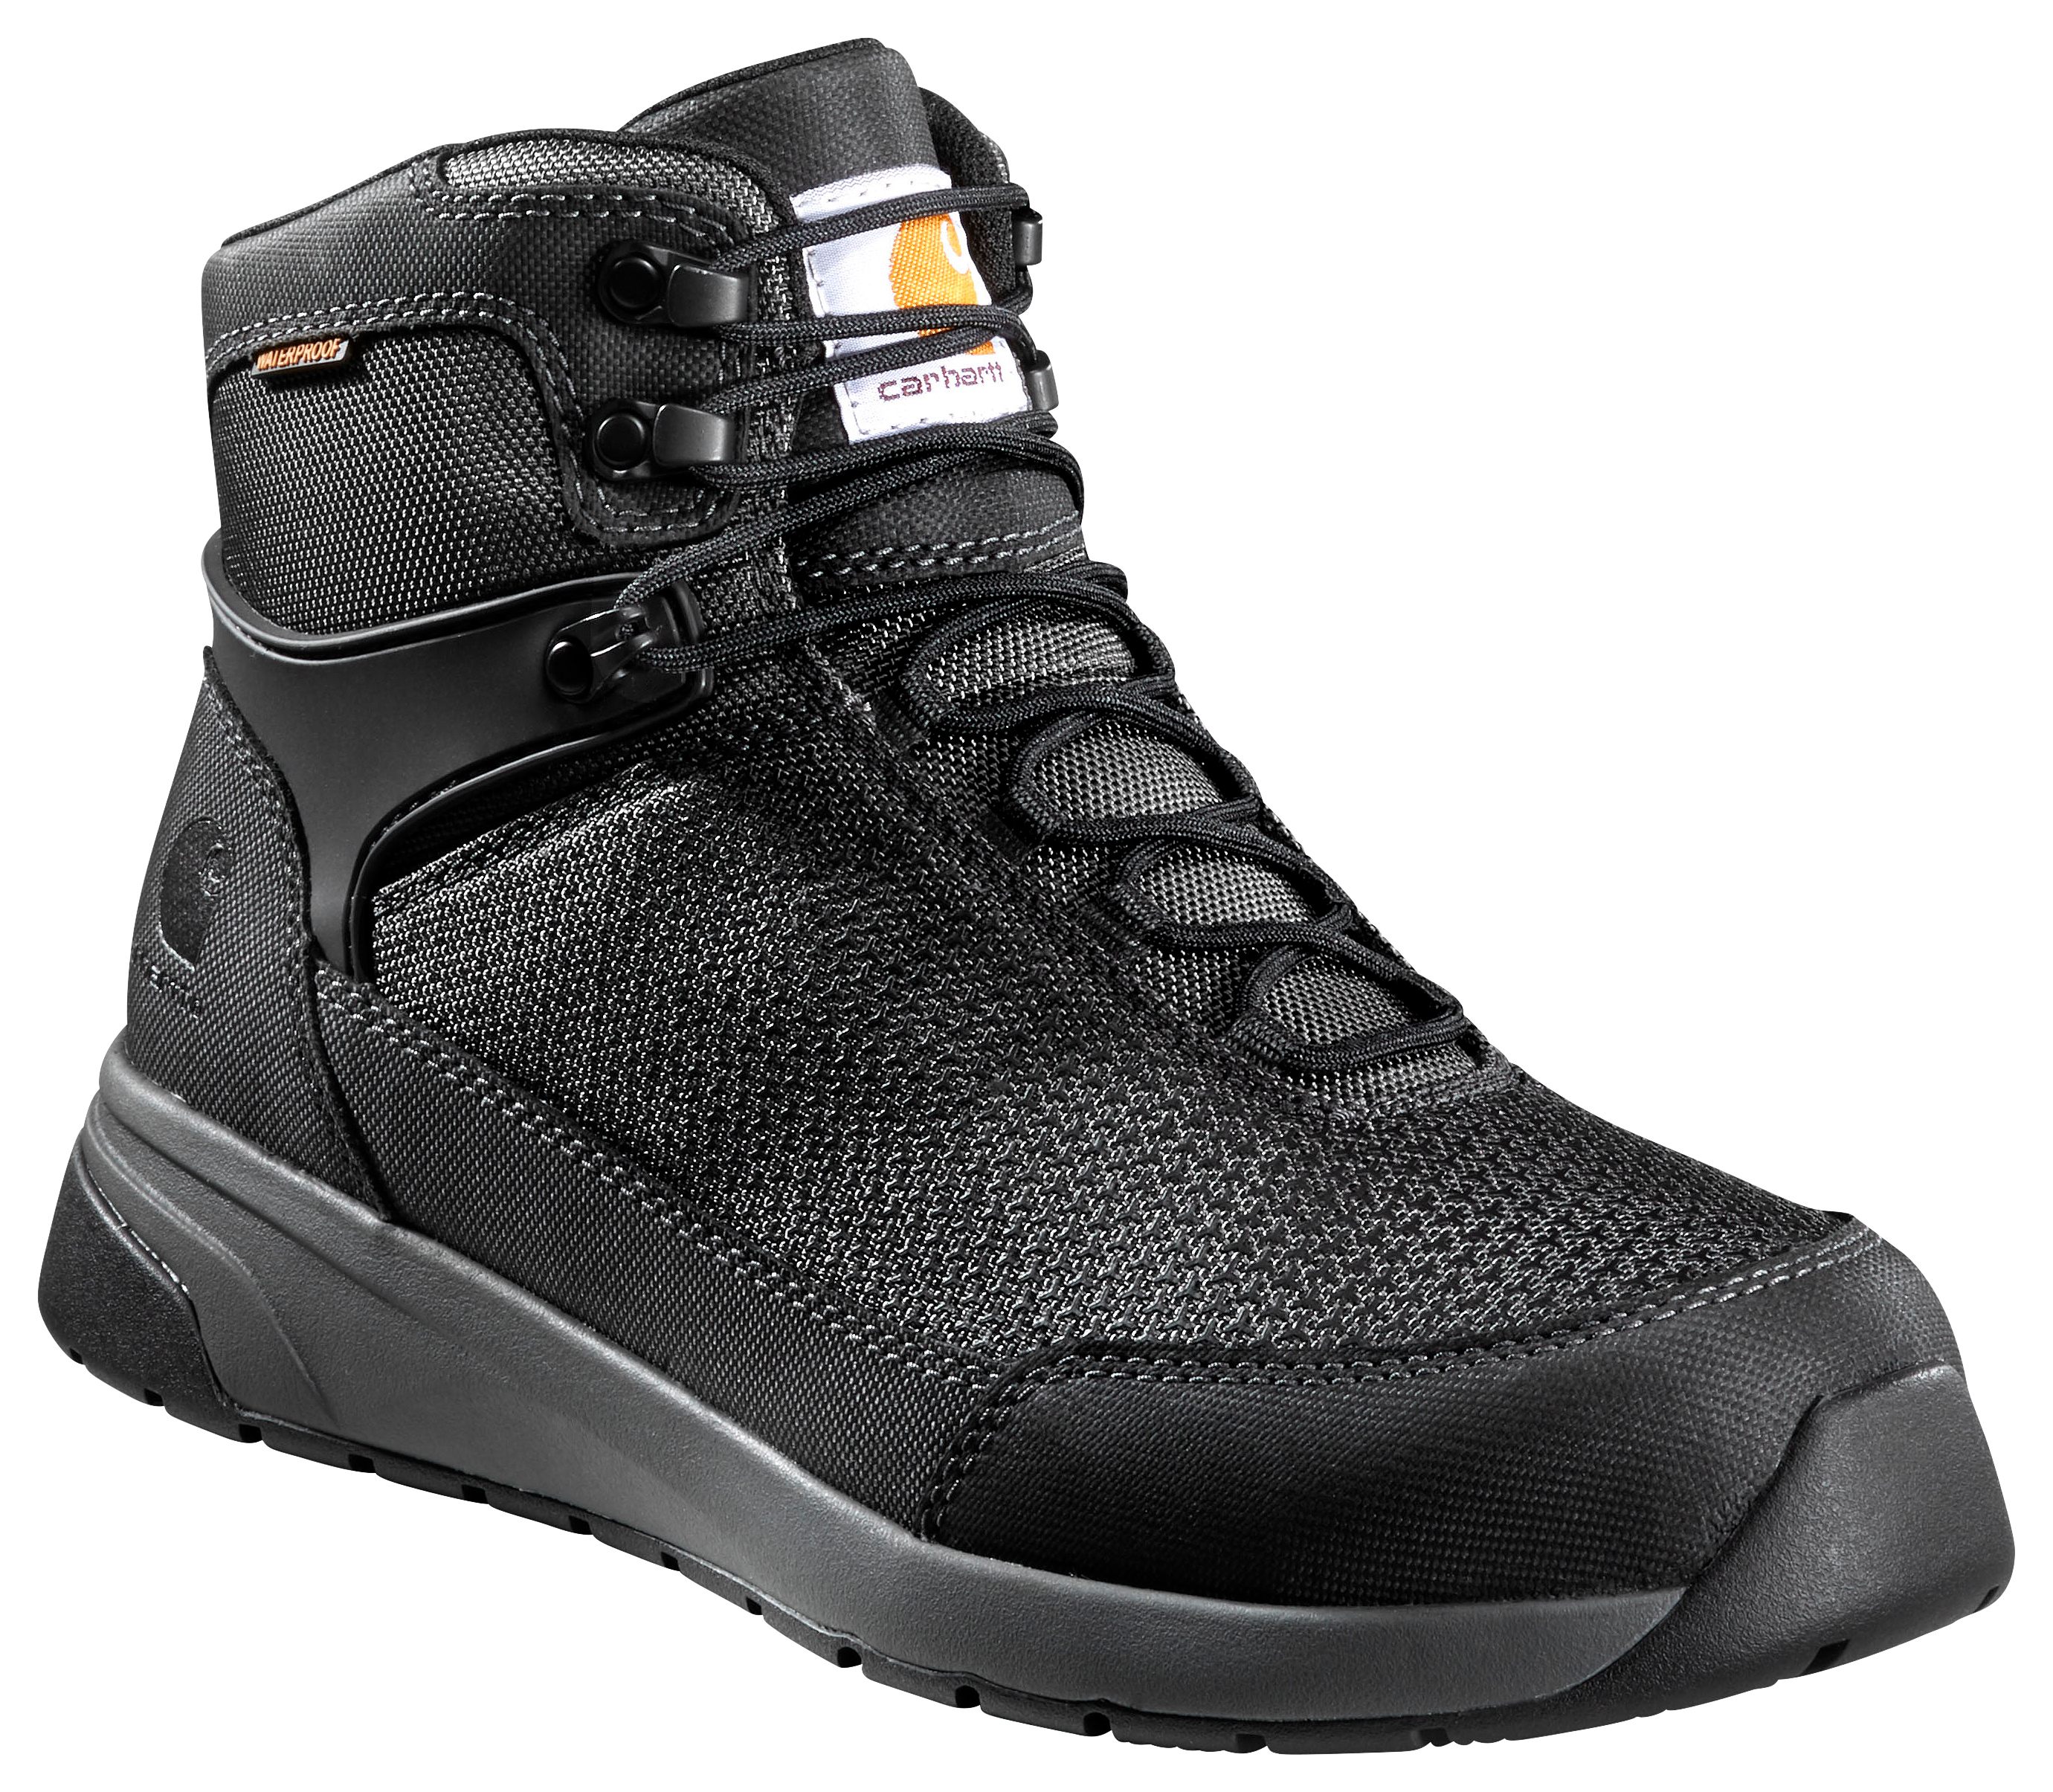 Carhartt Force 6"" Nano Composite-Toe Work Boots for Men - Black - 14W